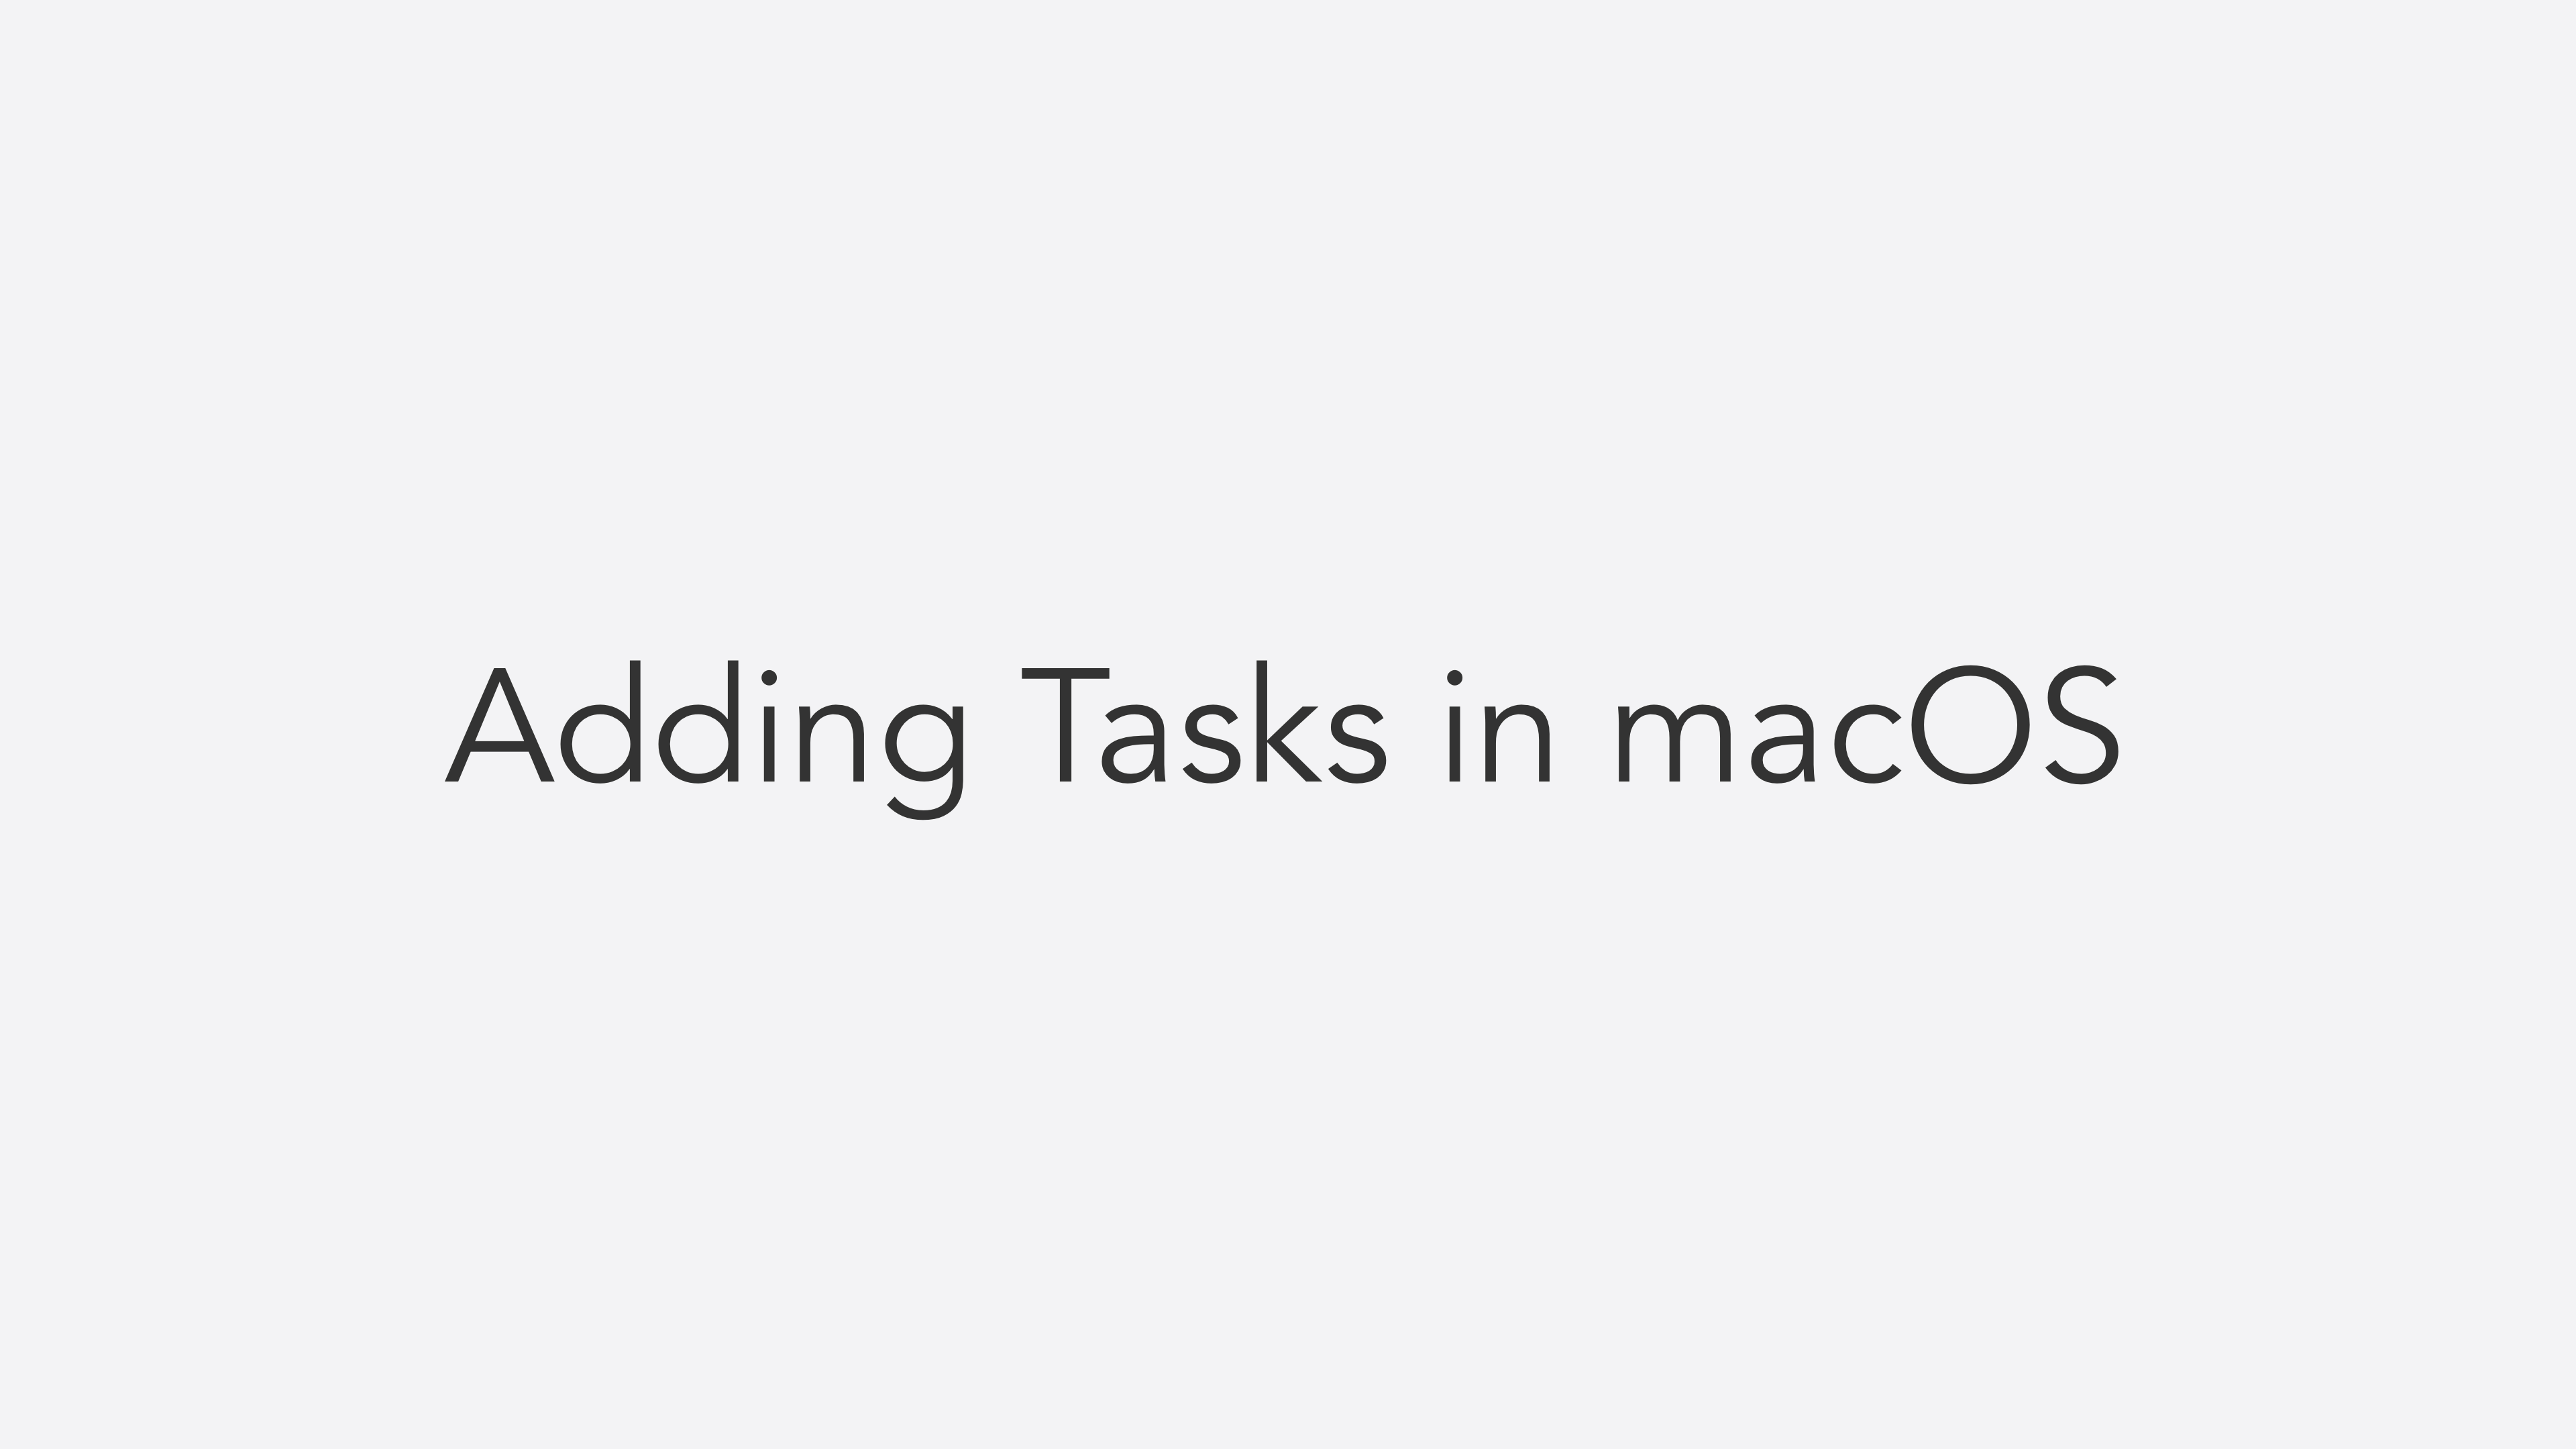 Adding Tasks in macOS